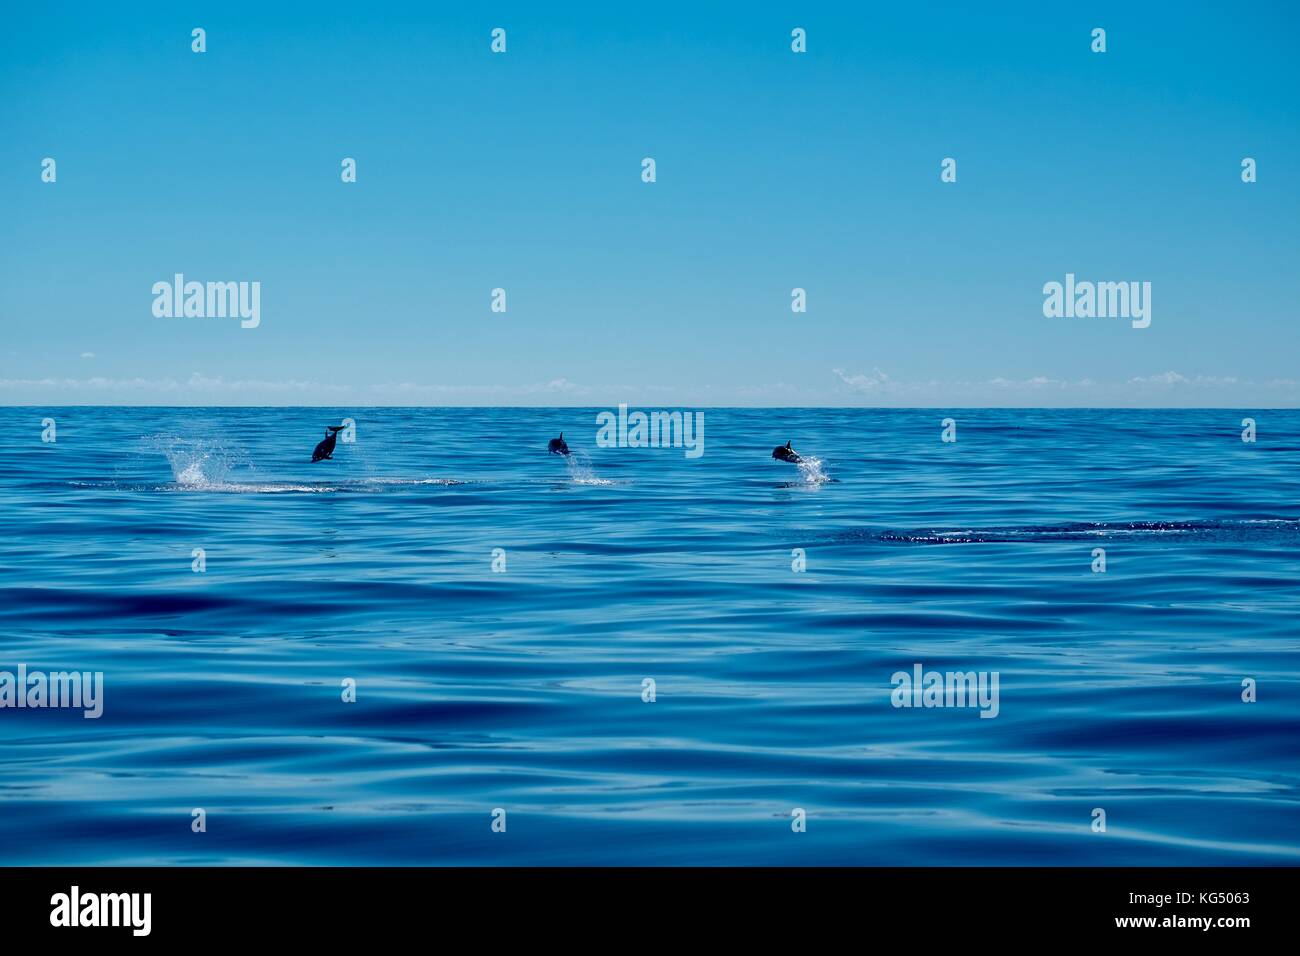 Three dolphins flying across a calm Atlantic Ocean. Stock Photo